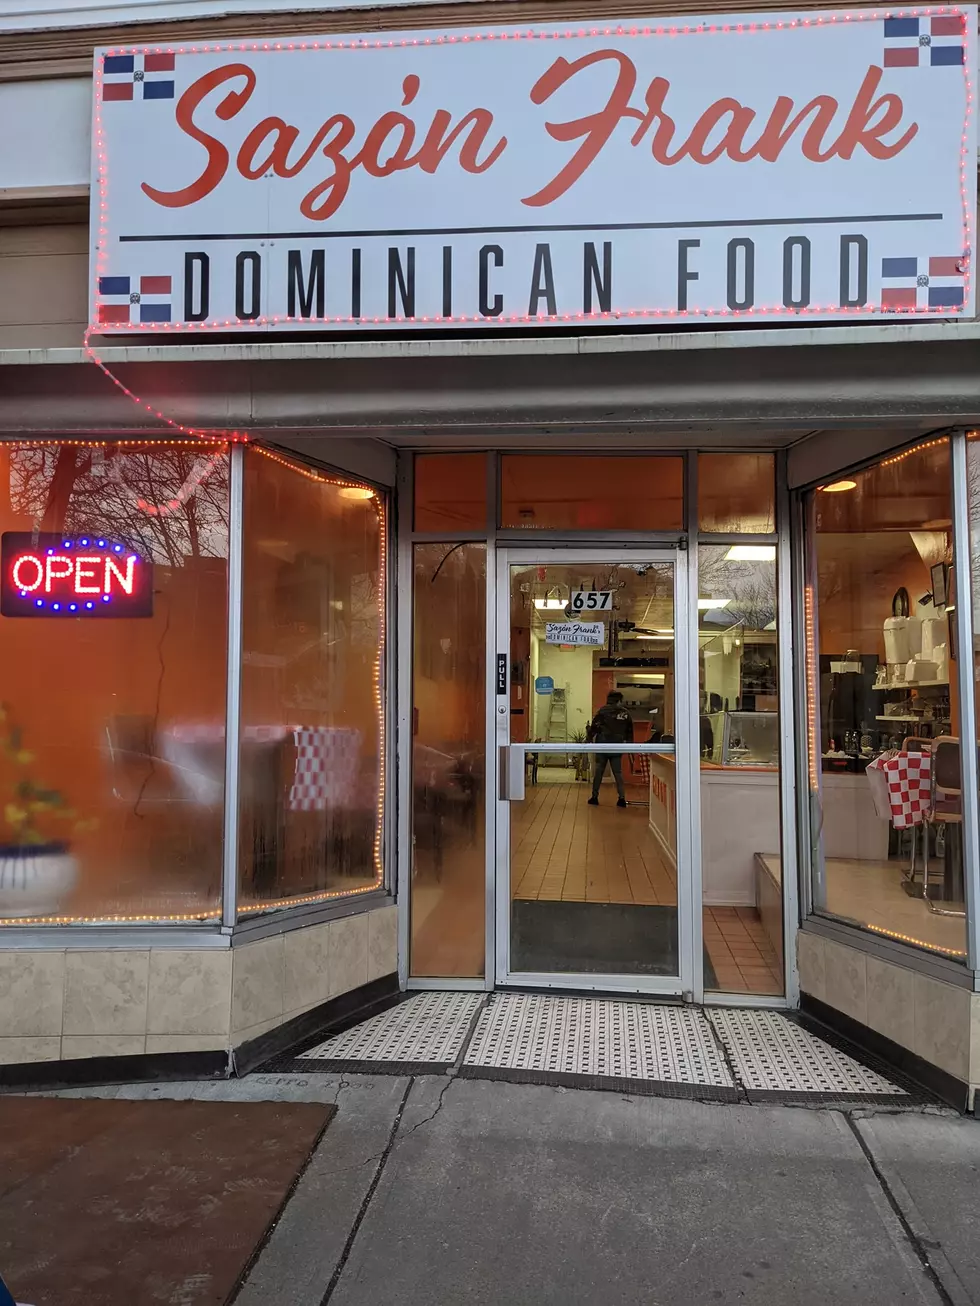 New Utica Restaurant Alert: Sazon Frank Dominican Food On Bleeker Street